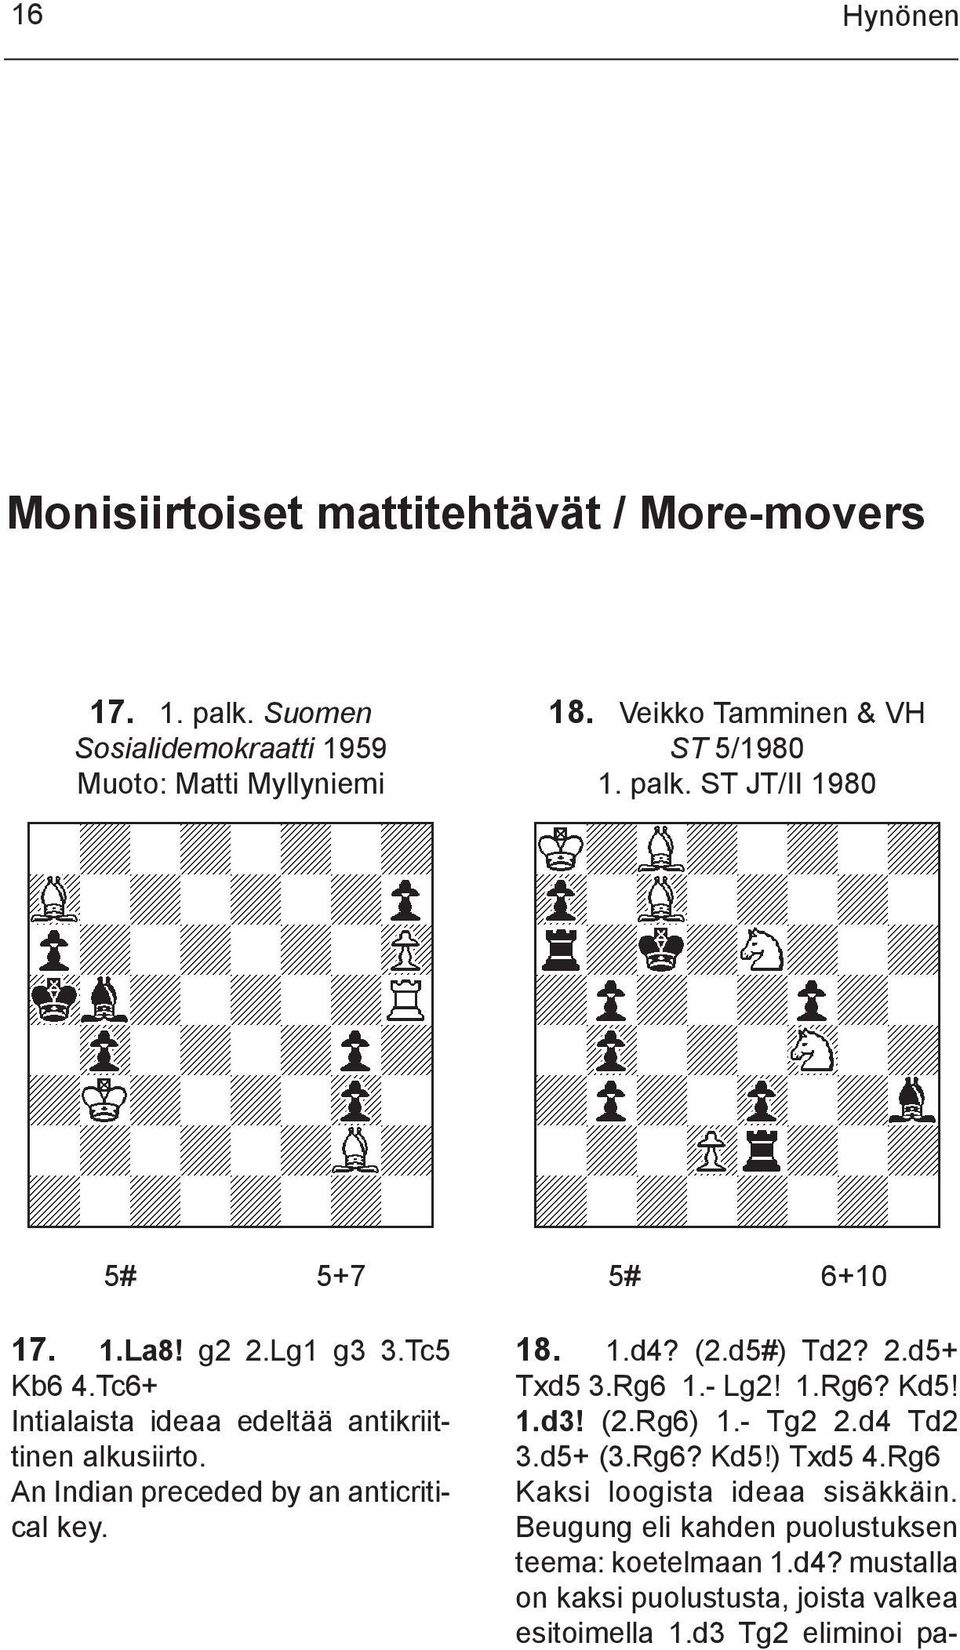 An Indian preceded by an anticritical key. 5# 6+10 18. 1.d4? (2.d5#) Td2? 2.d5+ Txd5 3.Rg6 1.- Lg2! 1.Rg6? Kd5! 1.d3! (2.Rg6) 1.- Tg2 2.d4 Td2 3.d5+ (3.Rg6? Kd5!) Txd5 4.